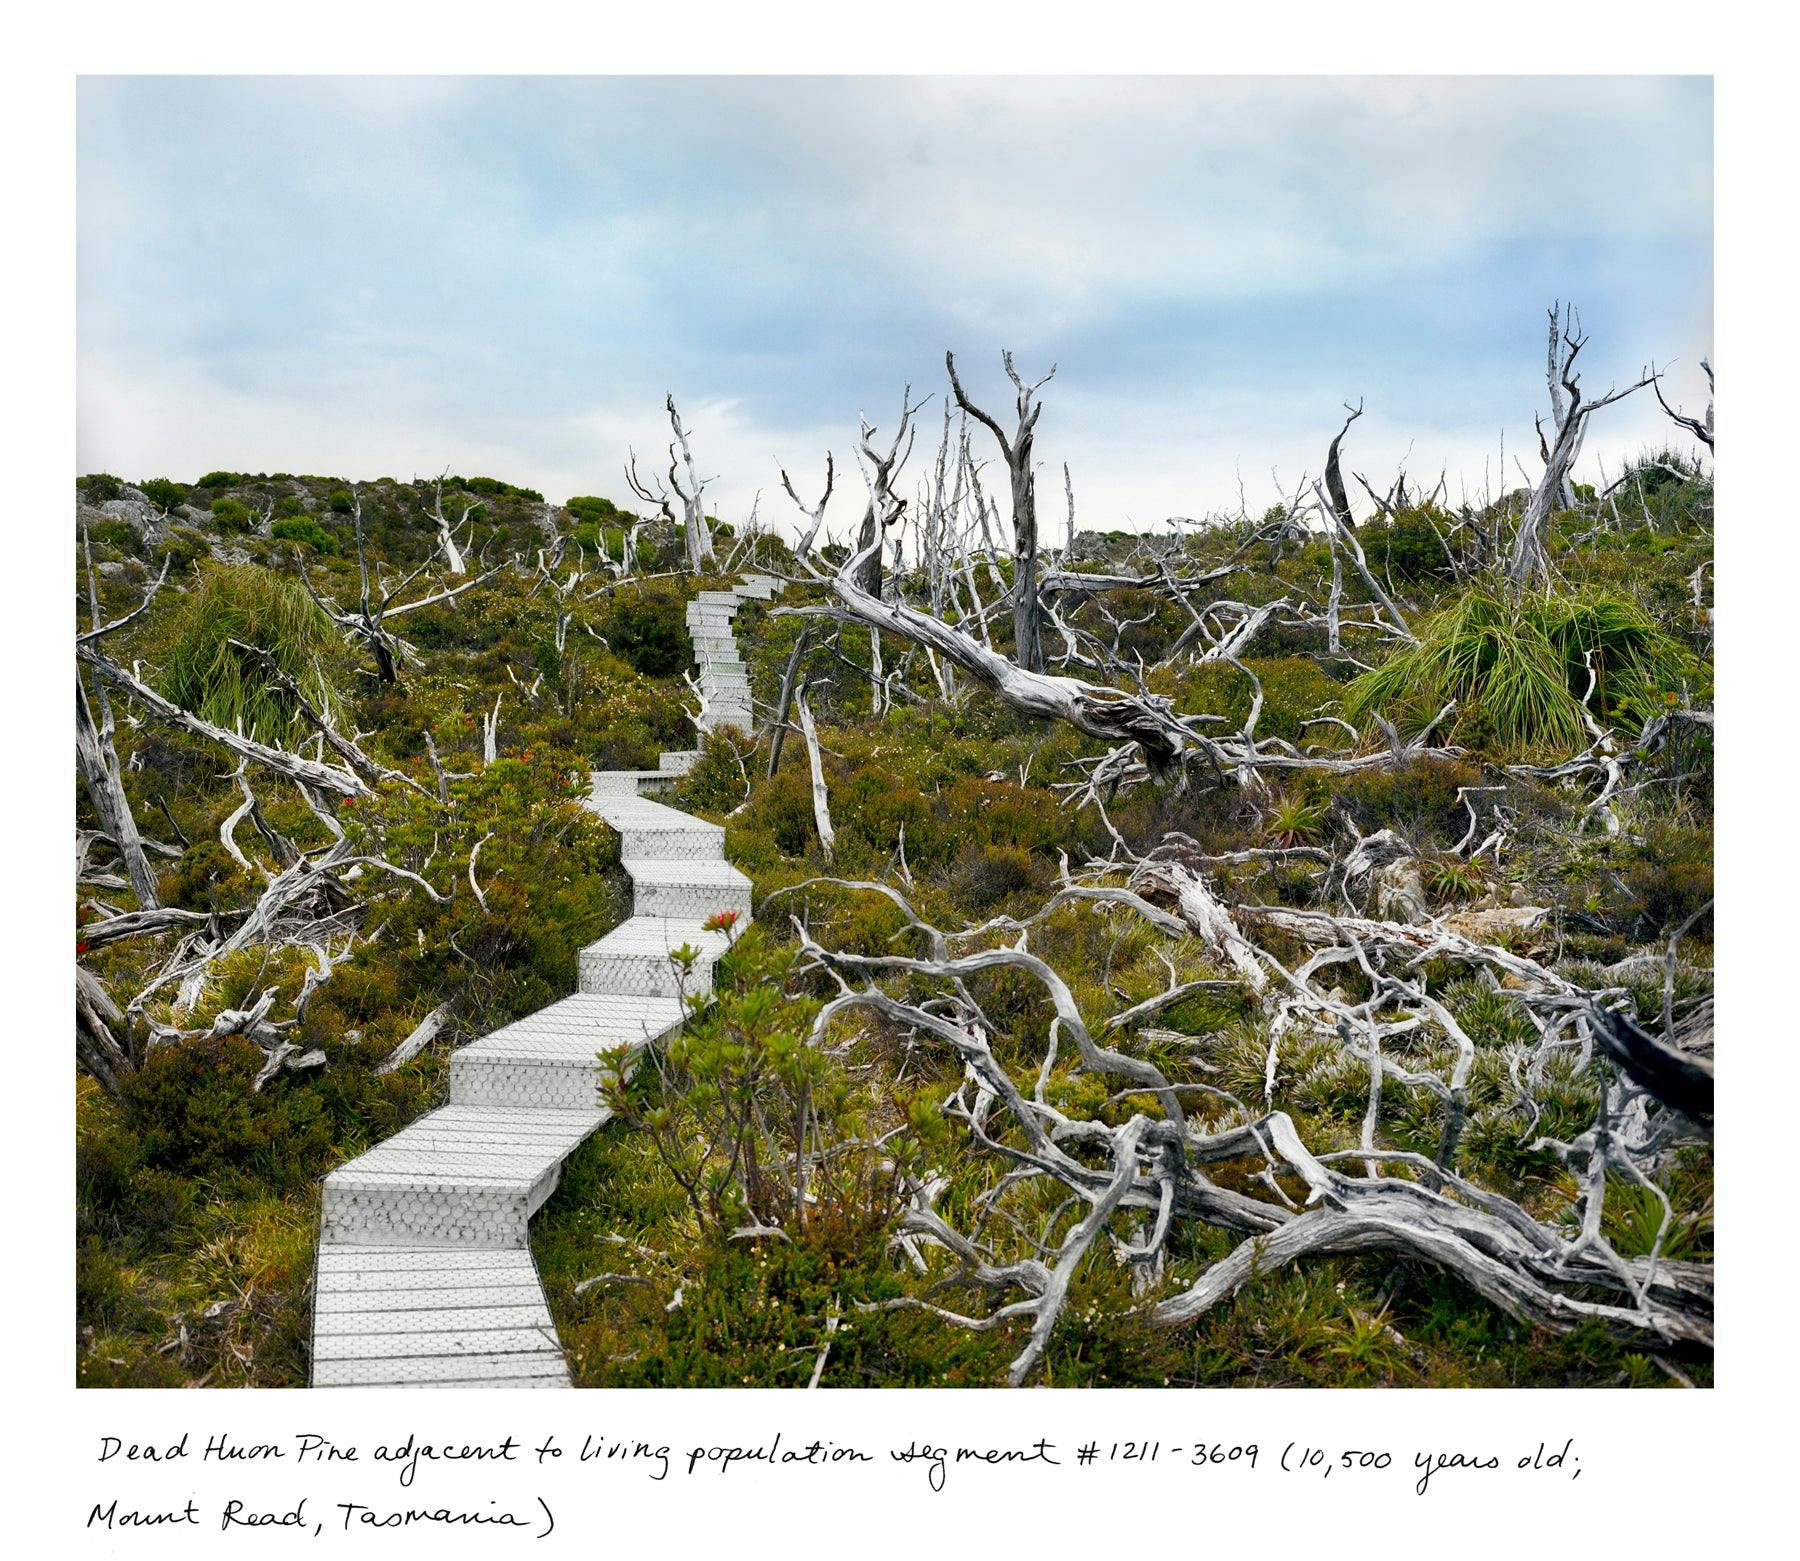 Rachel Sussman - Dead Huon Pine adjacent to living population segment #1211- 3609 (10,500 years o - Photography